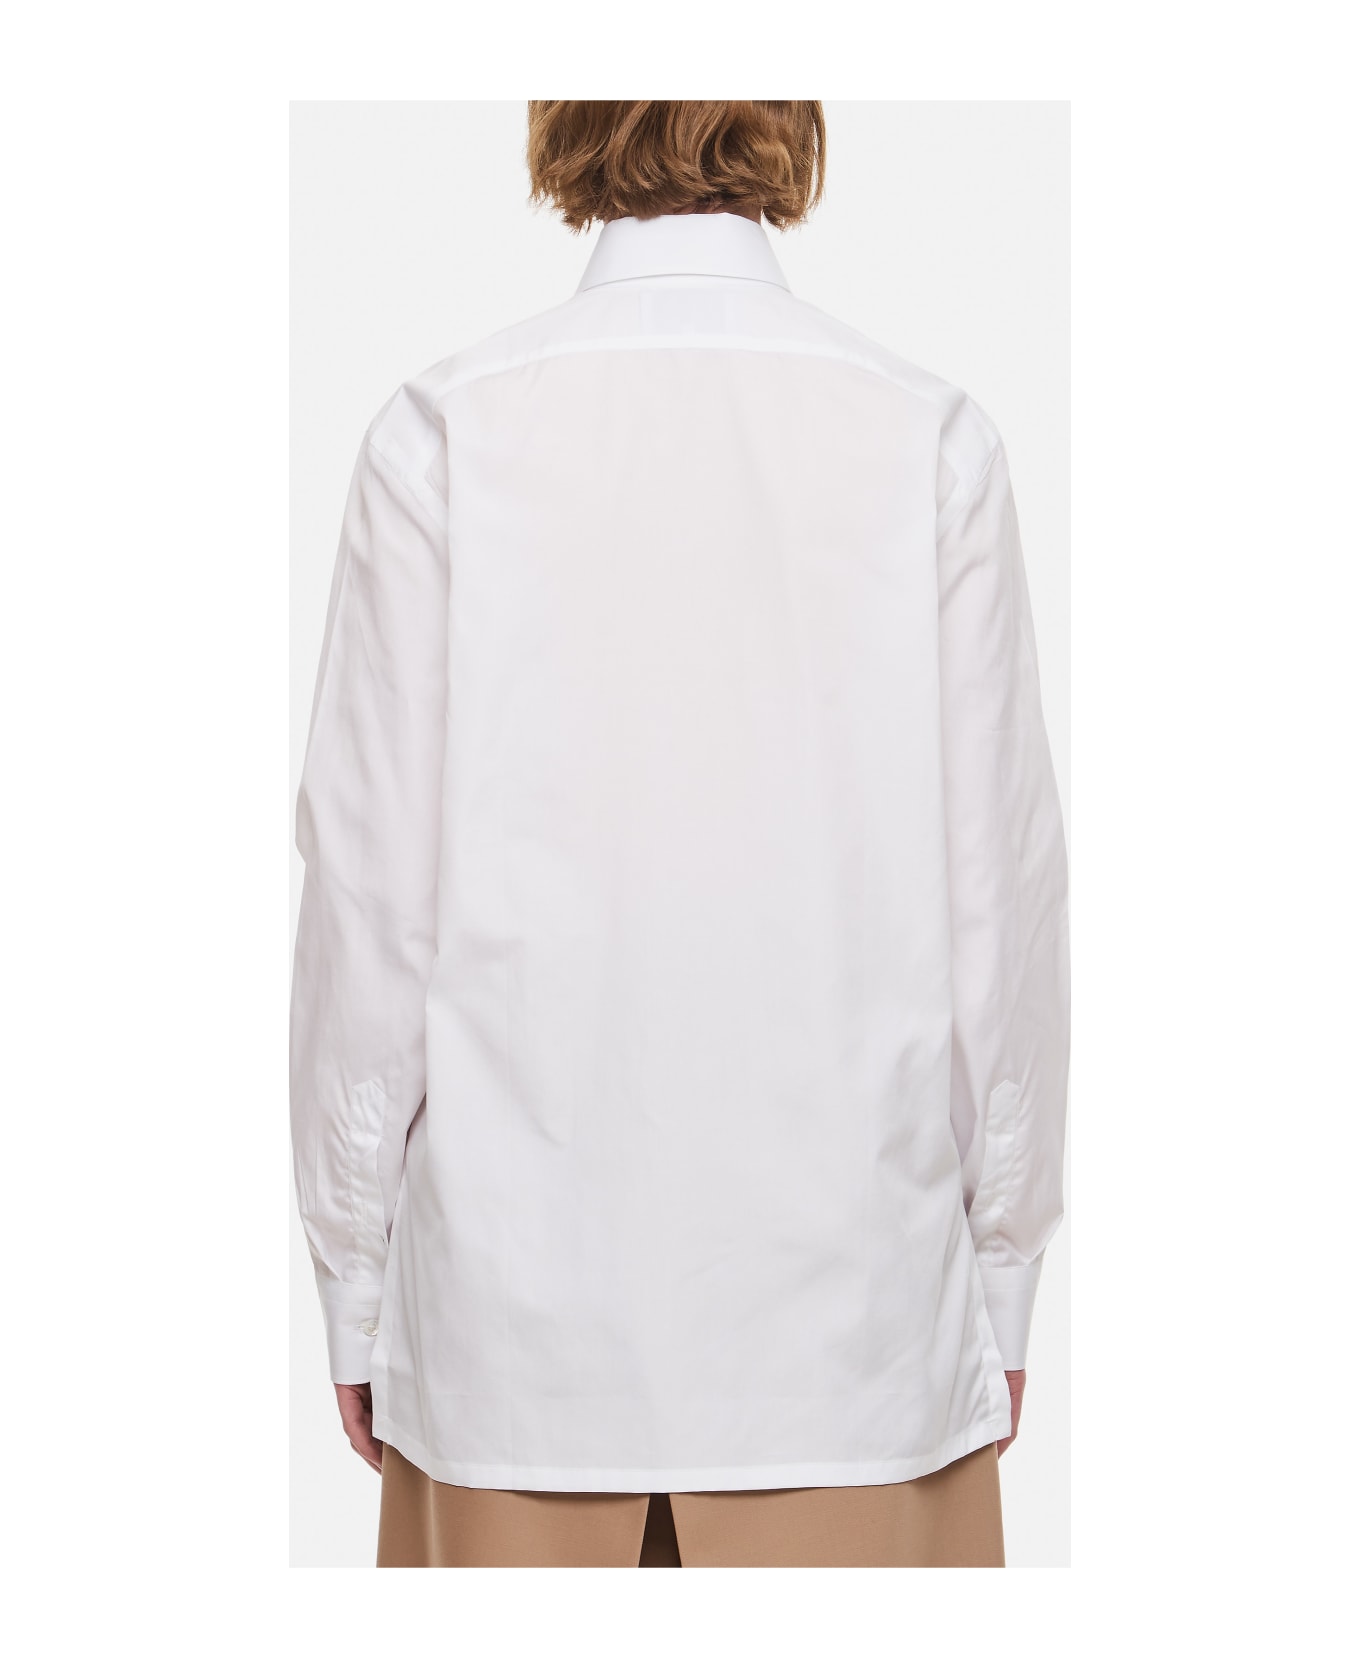 Setchu Cotton Shirt - White